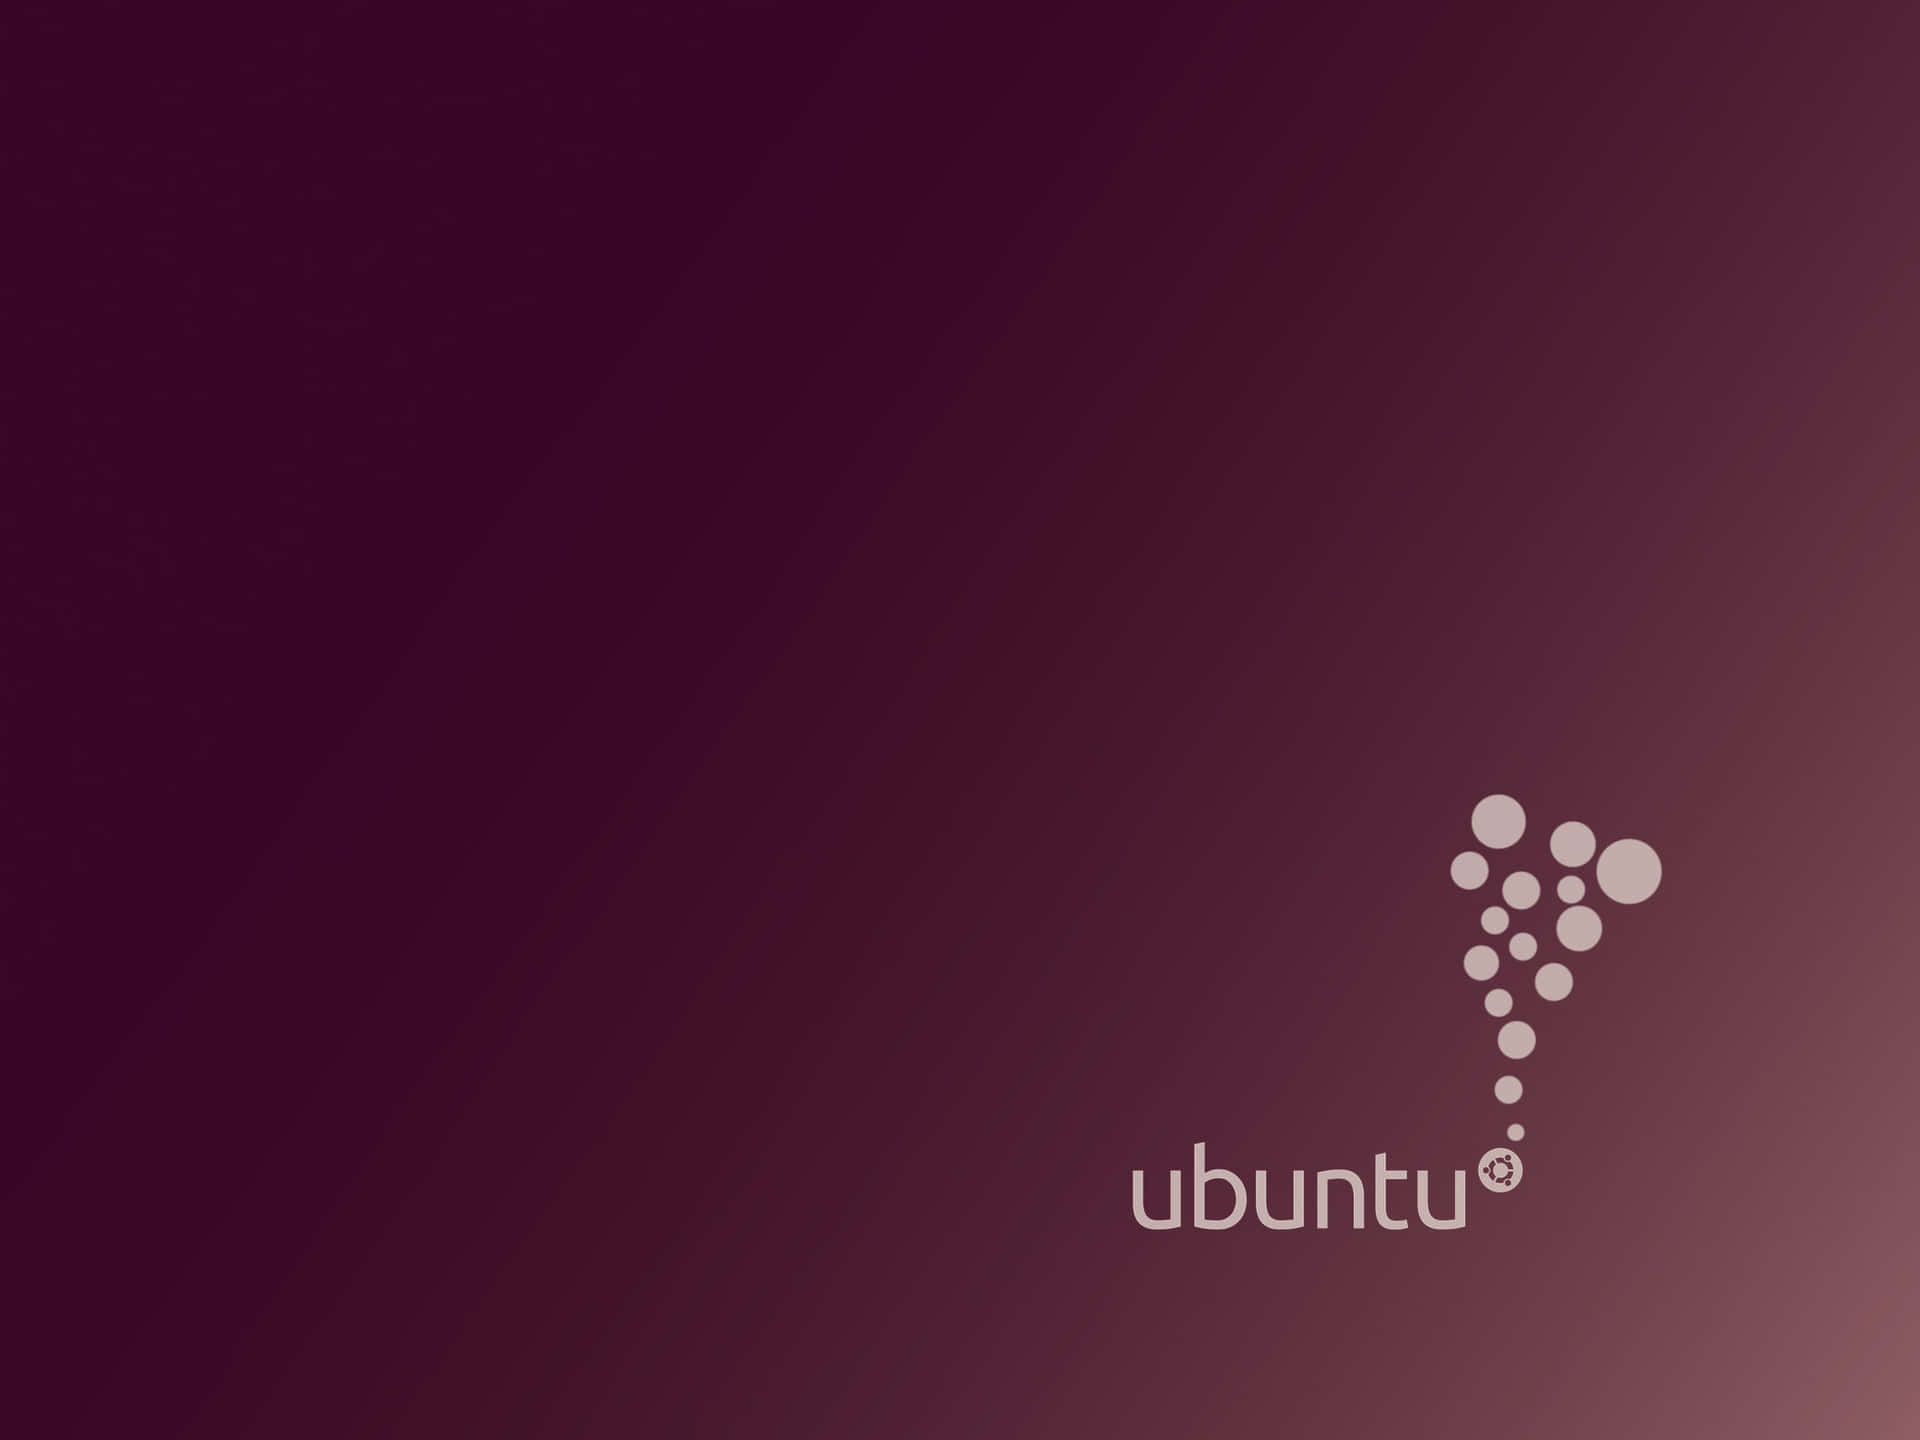 Ottieniil Massimo Dalla Tua Esperienza Con Ubuntu